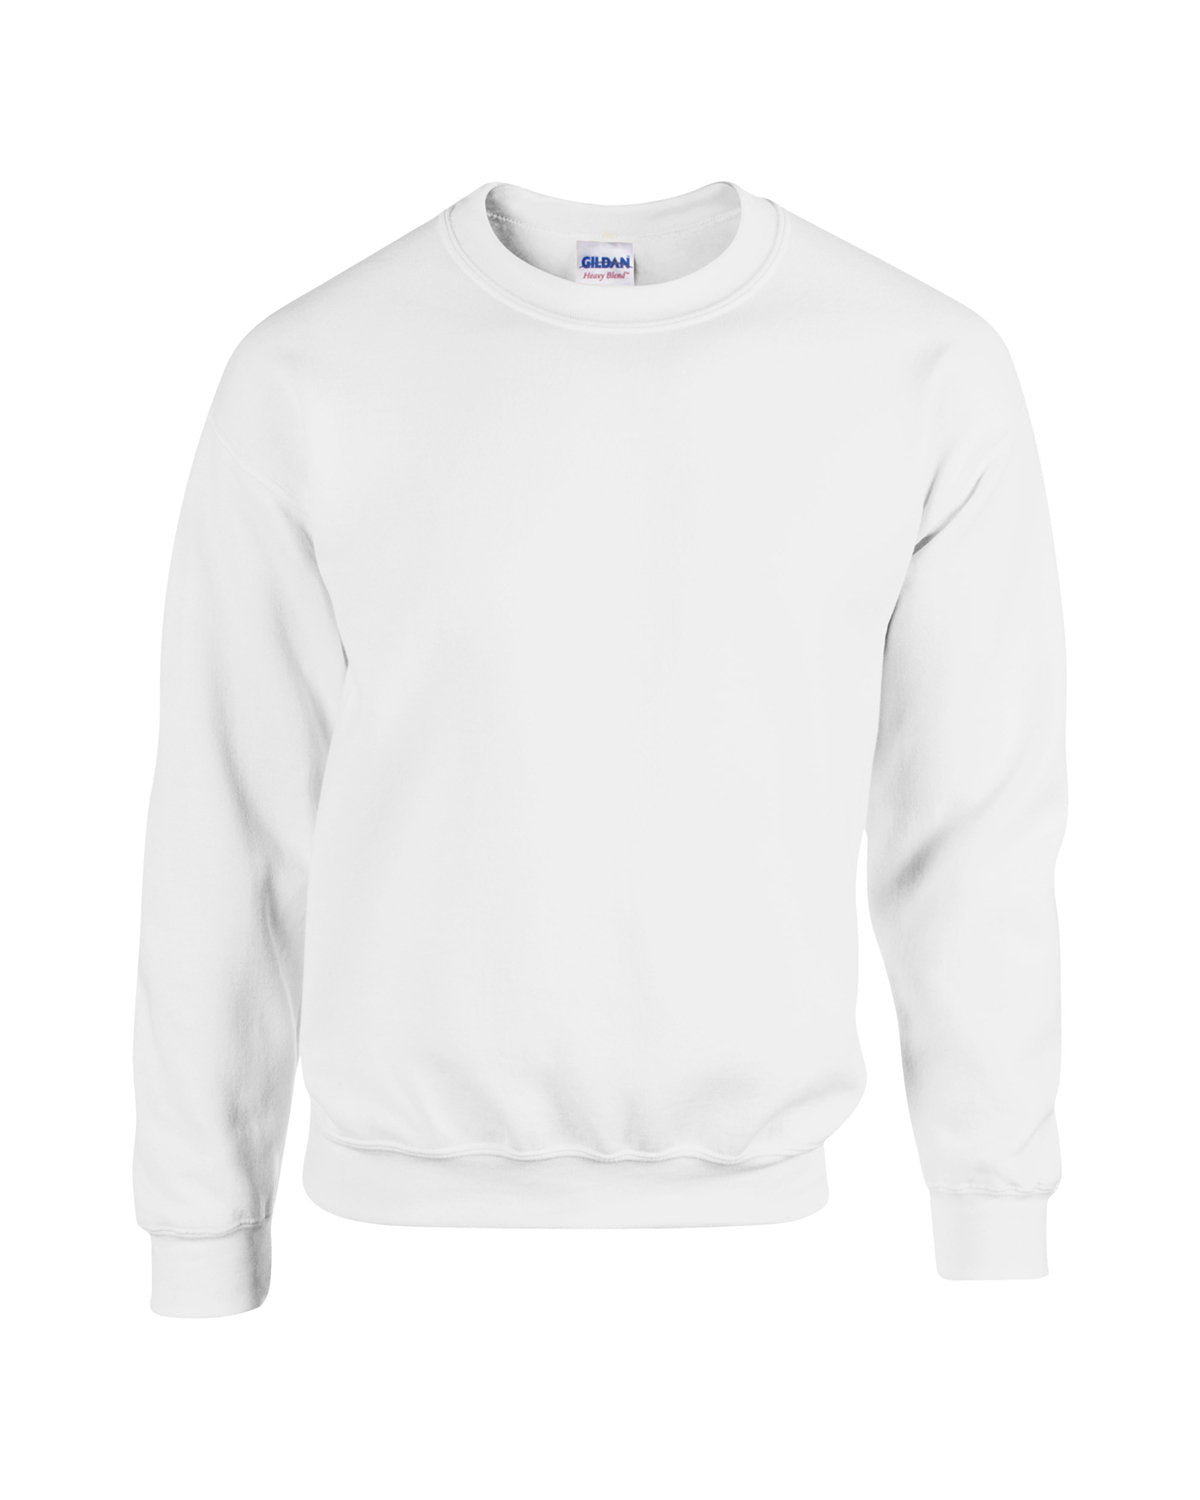 OMS Fastpitch - Gildan Crewneck Sweatshirt G180